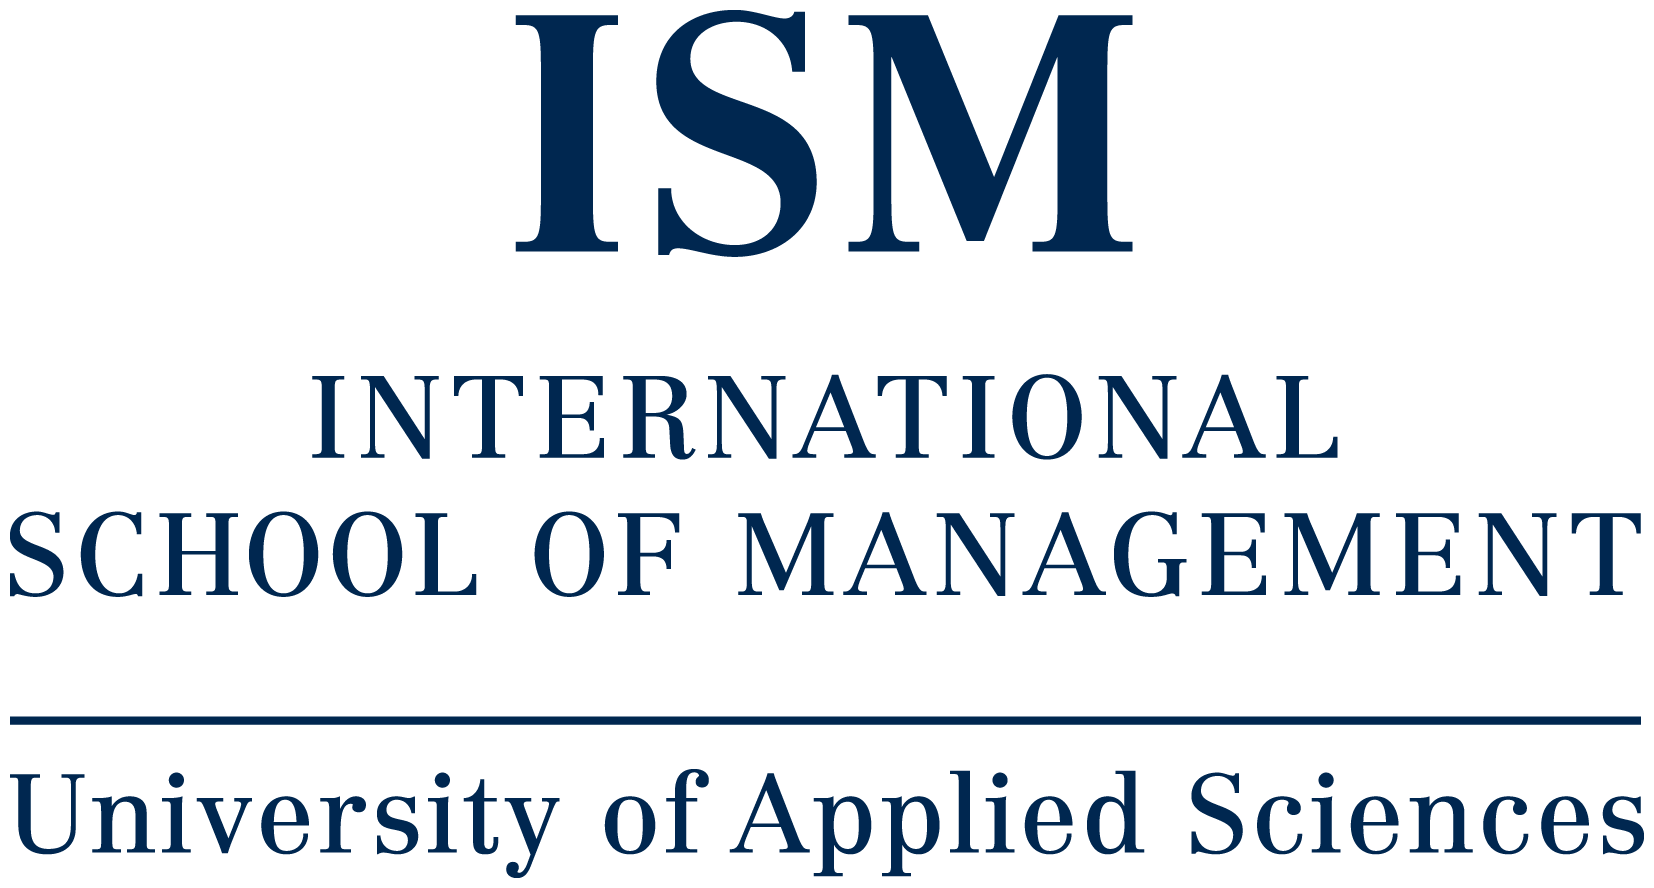 International School of Management GmbH Logo